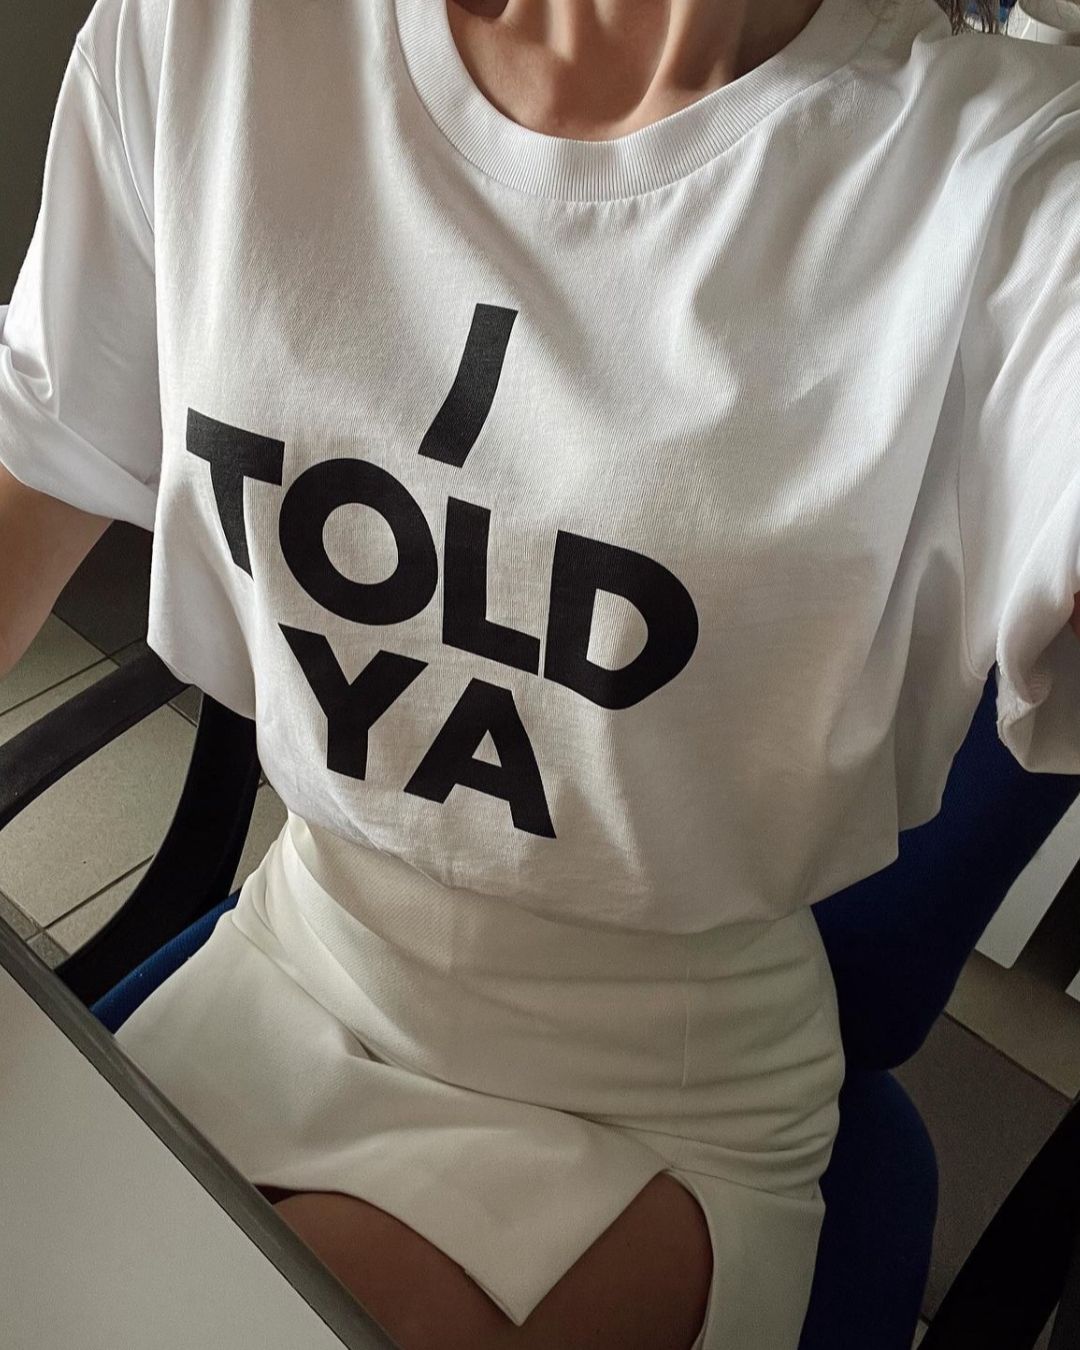 I TOLD YA t-shirt. White unisex. John John Kennedy. Clothes With Words apparel. Zendaya.